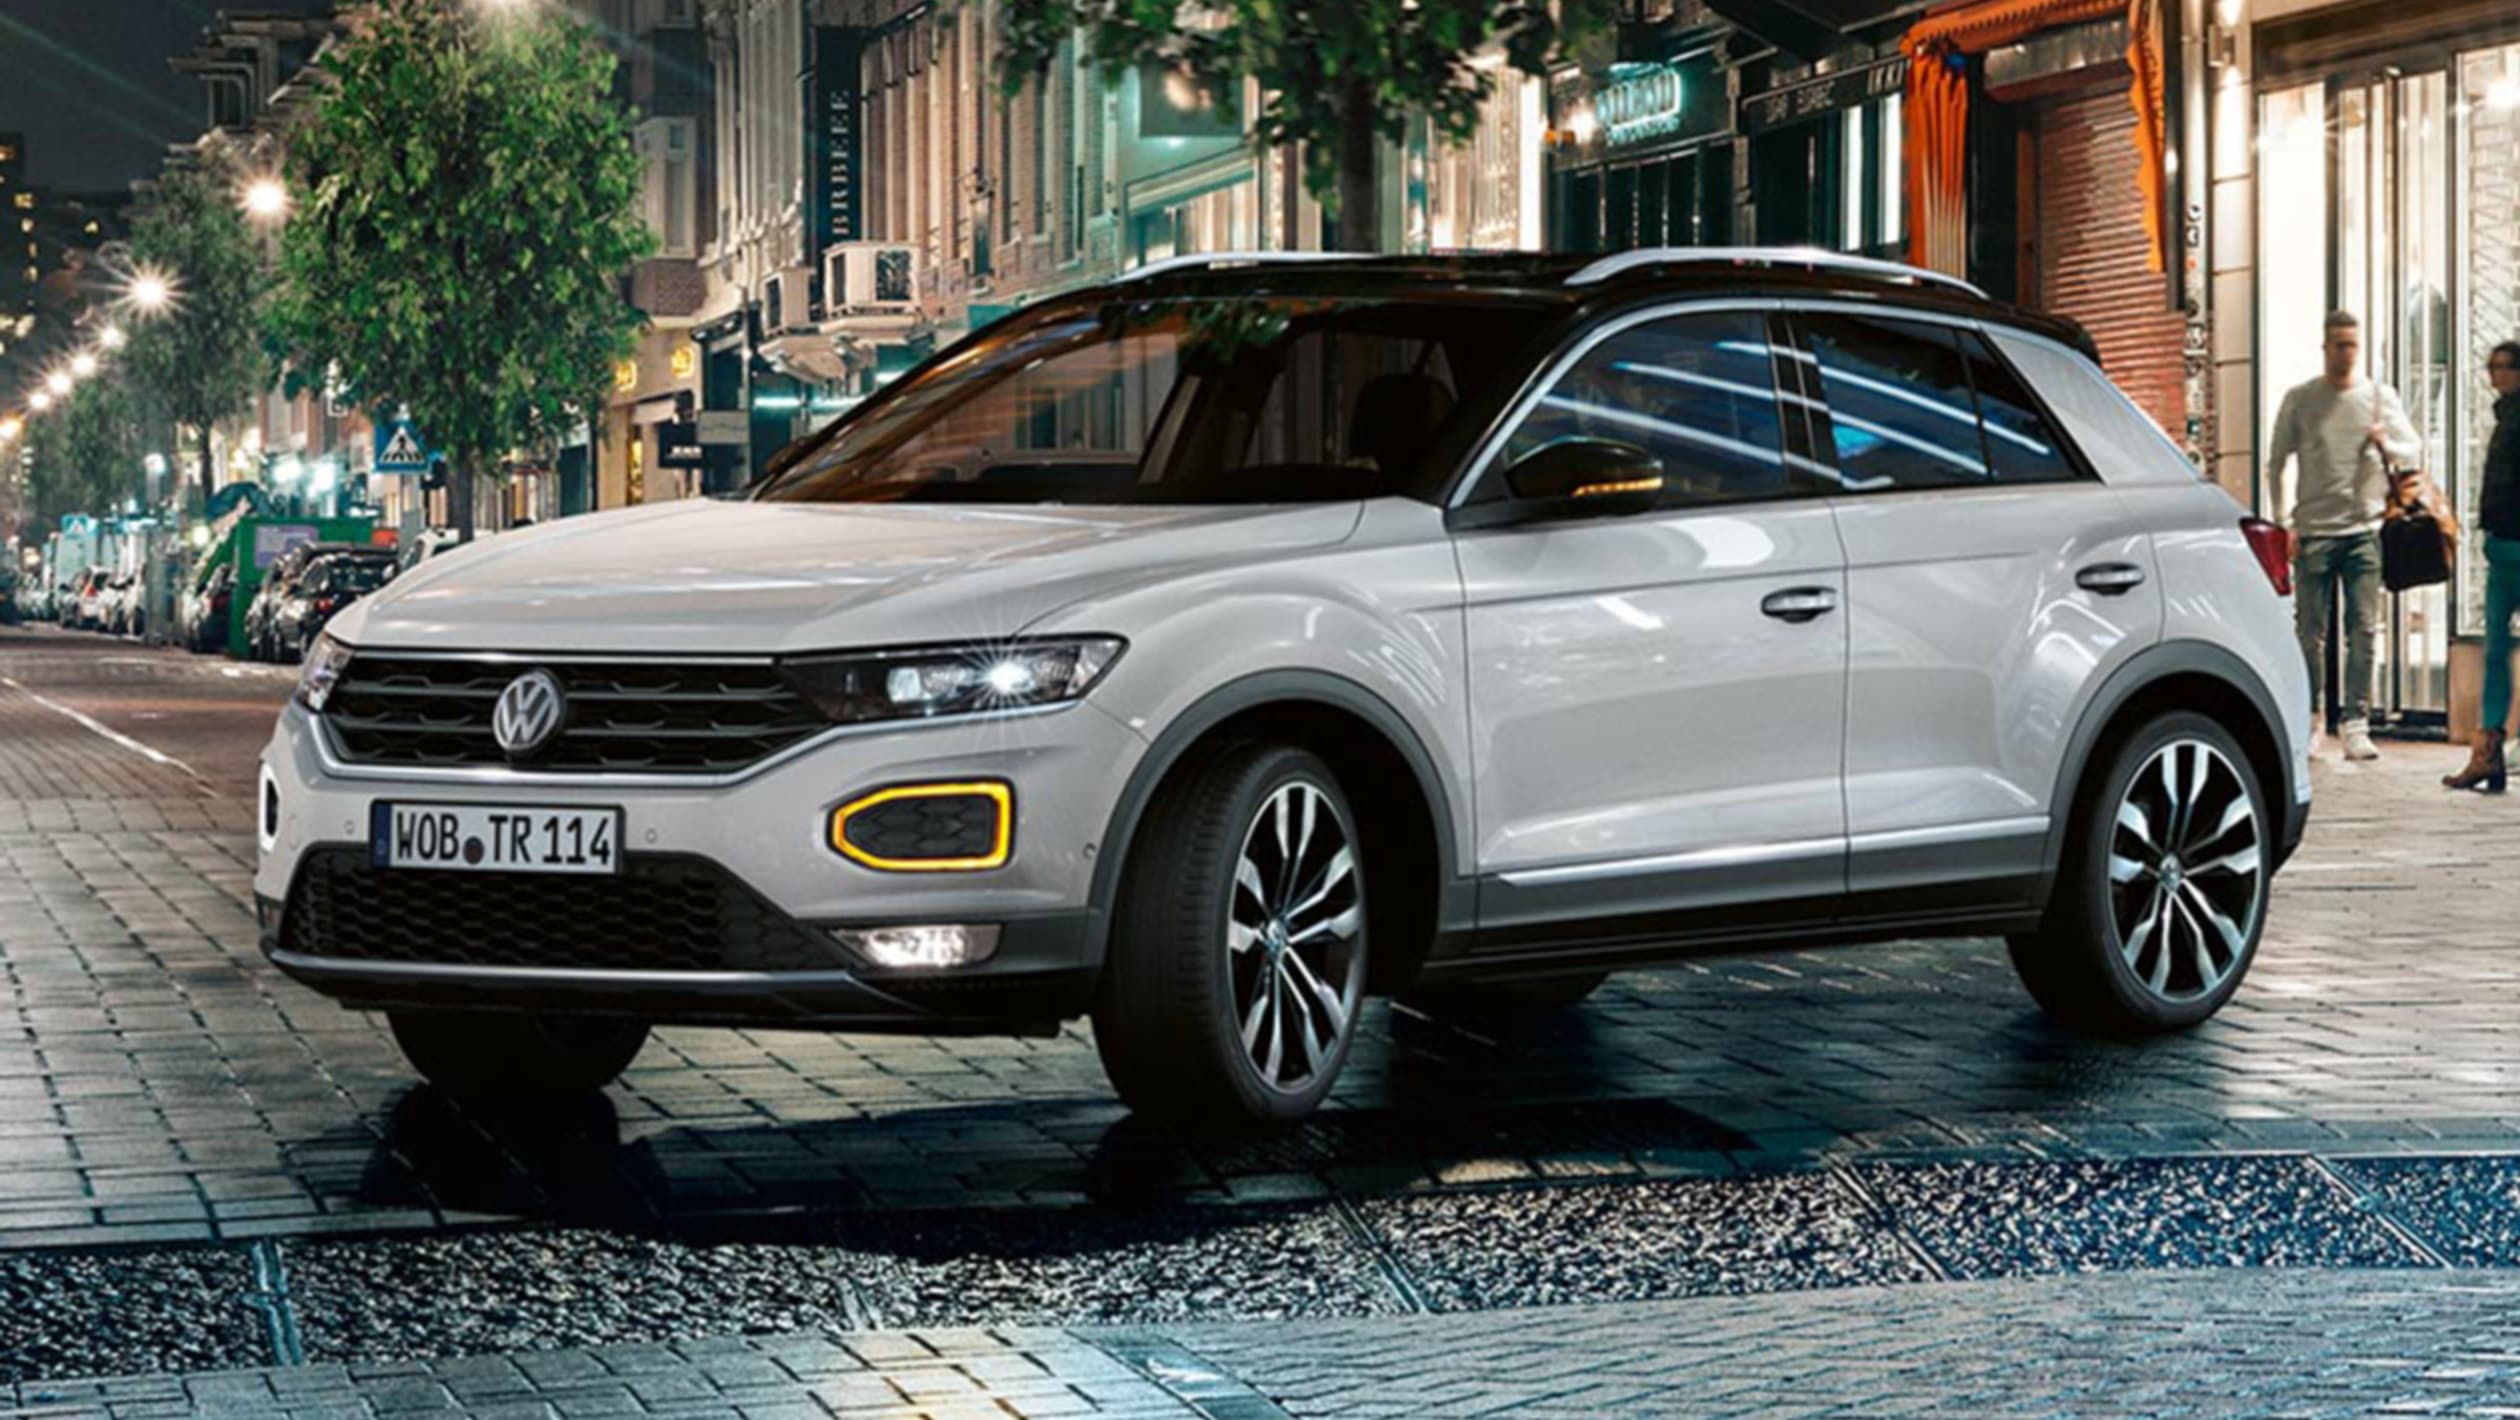 Volkswagen T-Roc design secrets revealed (sponsored) - pictures | Auto ...